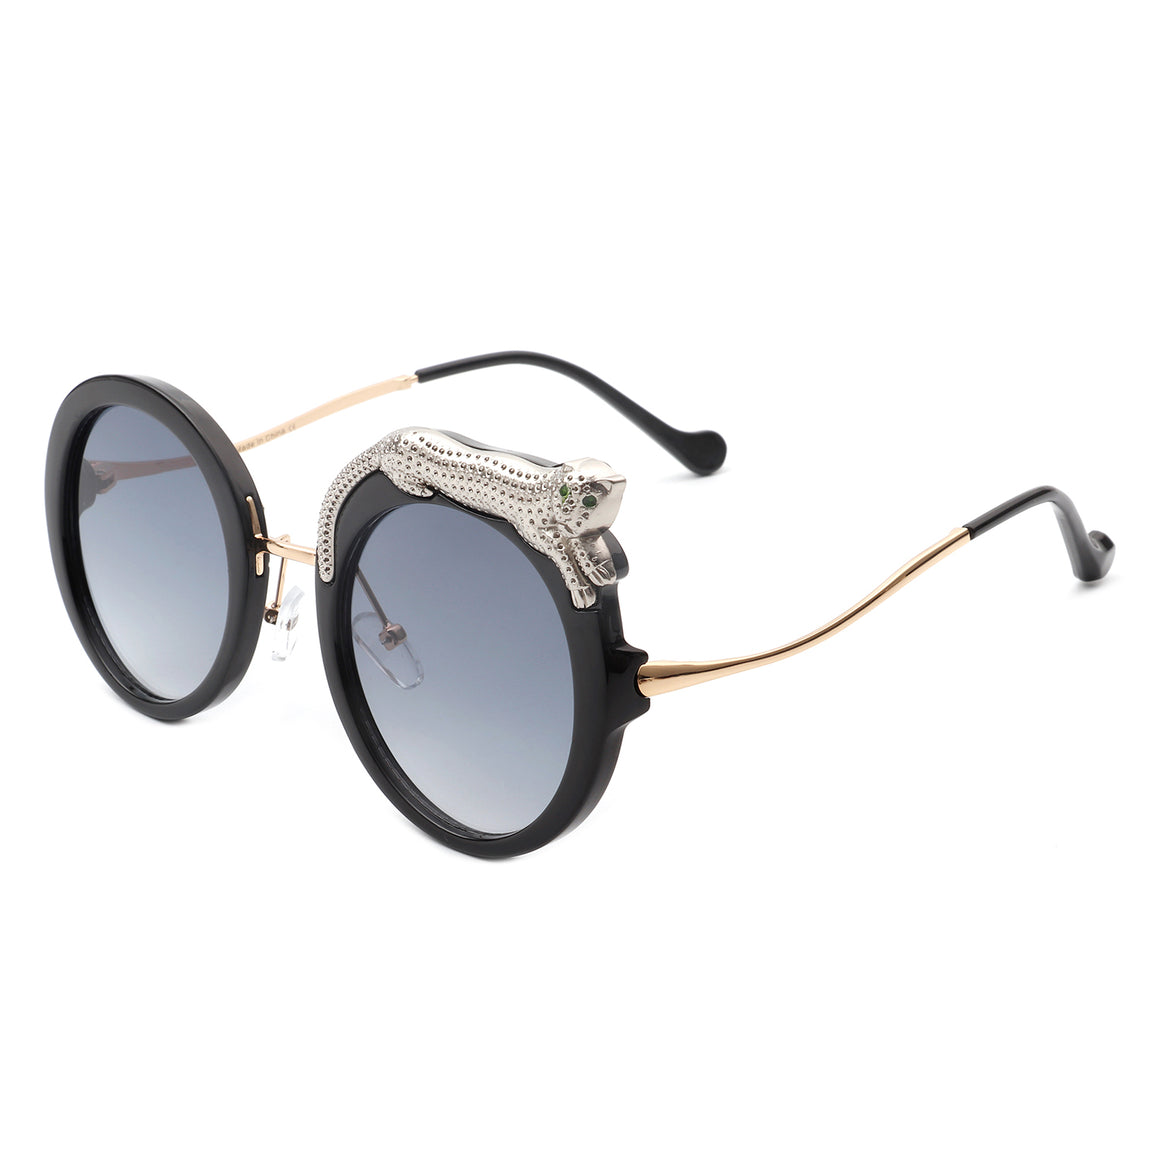 Yellowze - Women Circle Oversize Fashion Round Sunglasses W/ Leopard Design